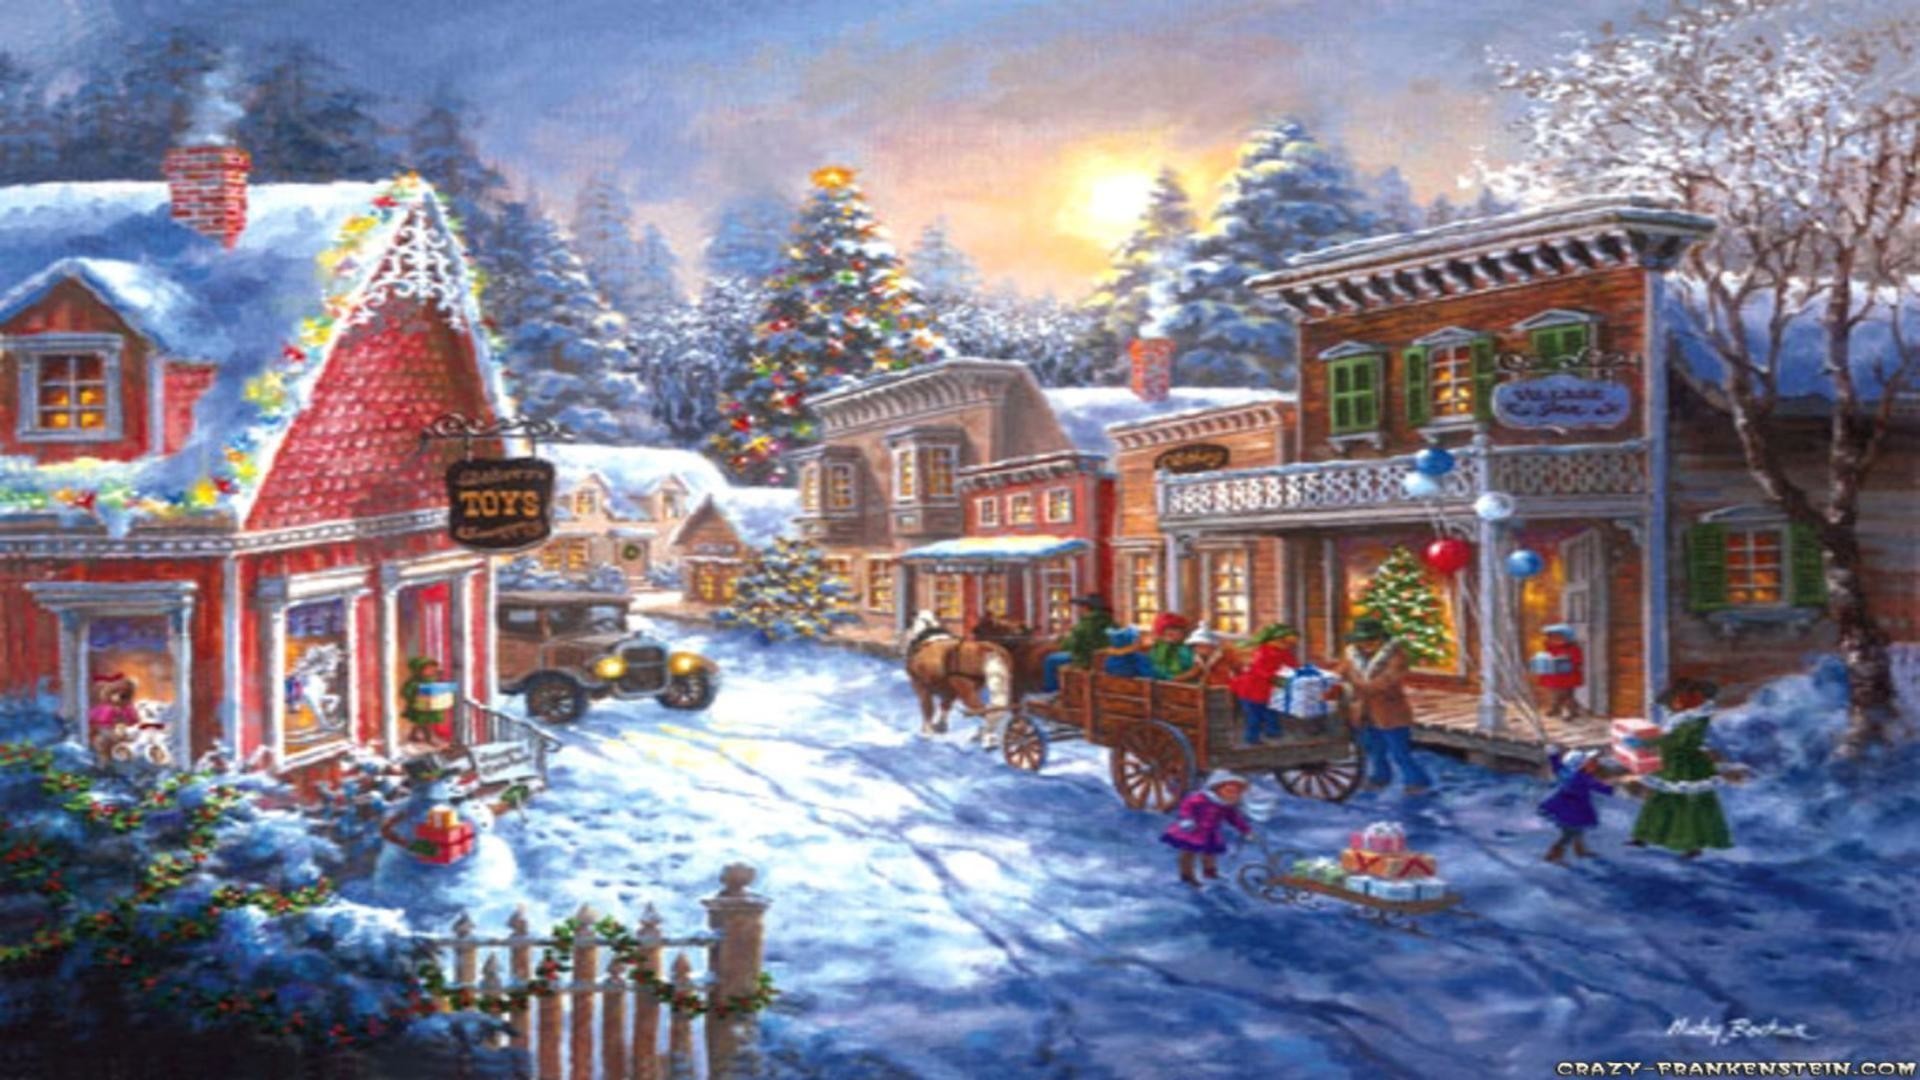 1274 Christmas Village Wallpaper Stock Photos  Free  RoyaltyFree Stock  Photos from Dreamstime